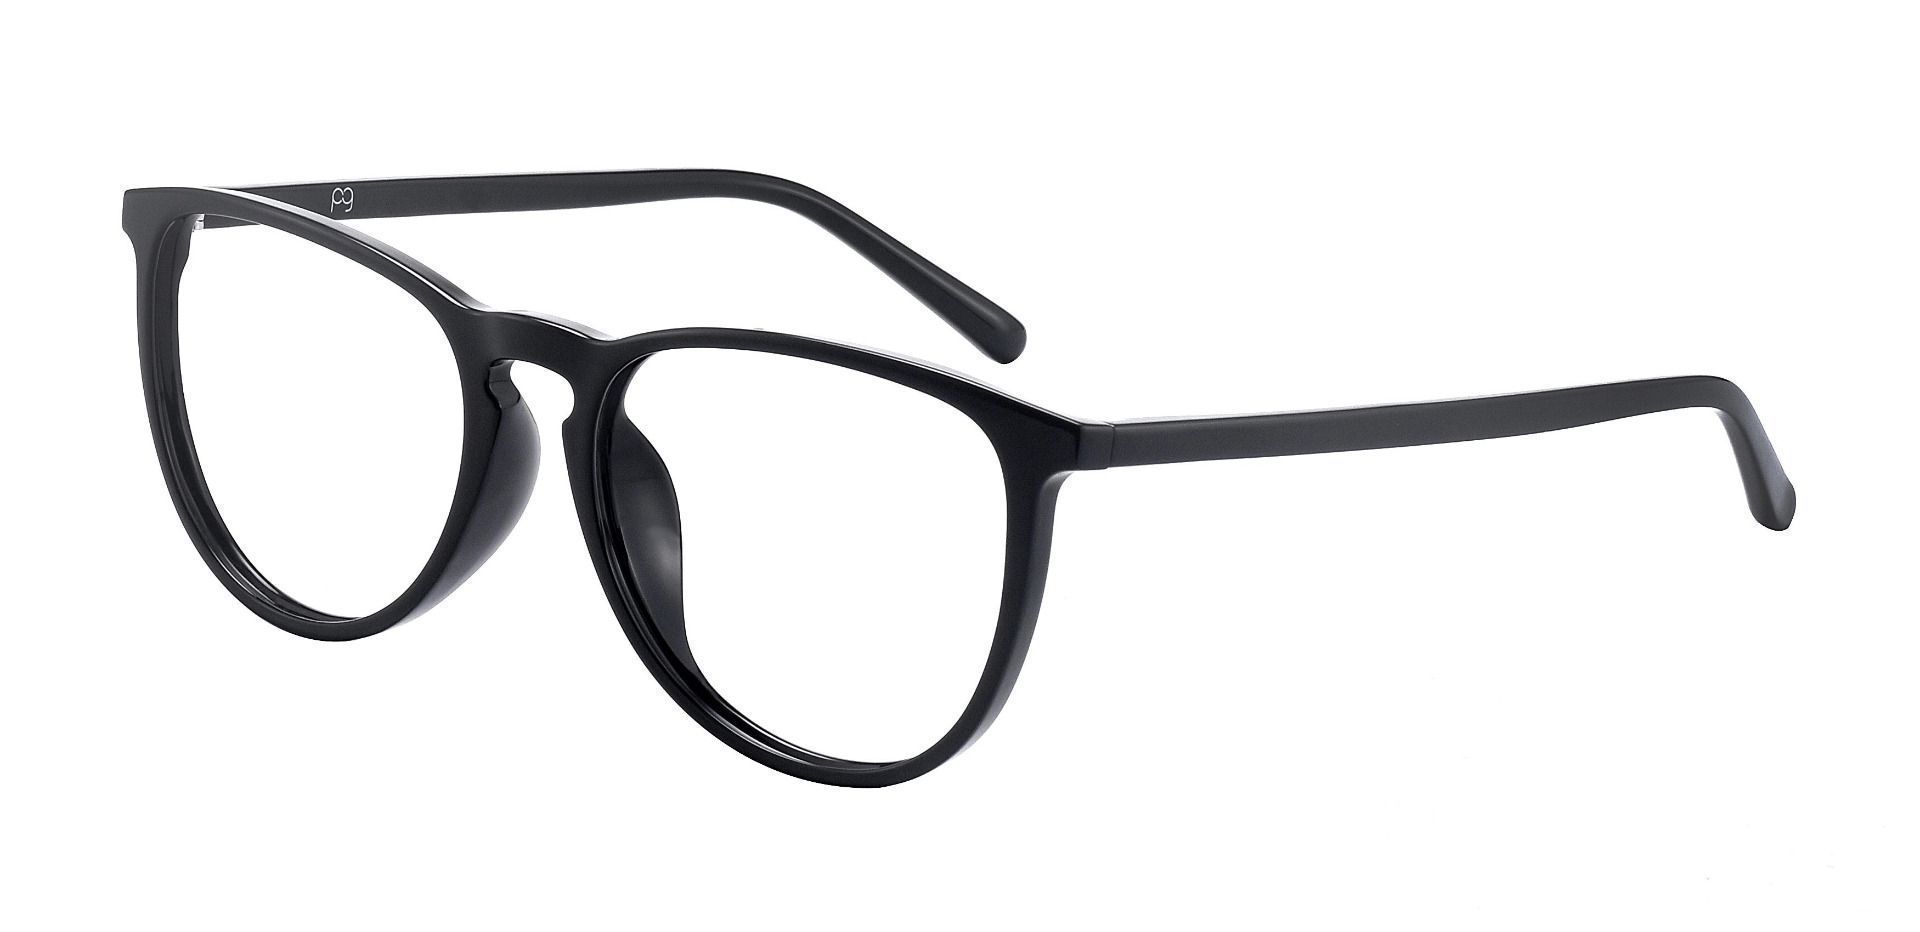 Rader Oval Reading Glasses - Black